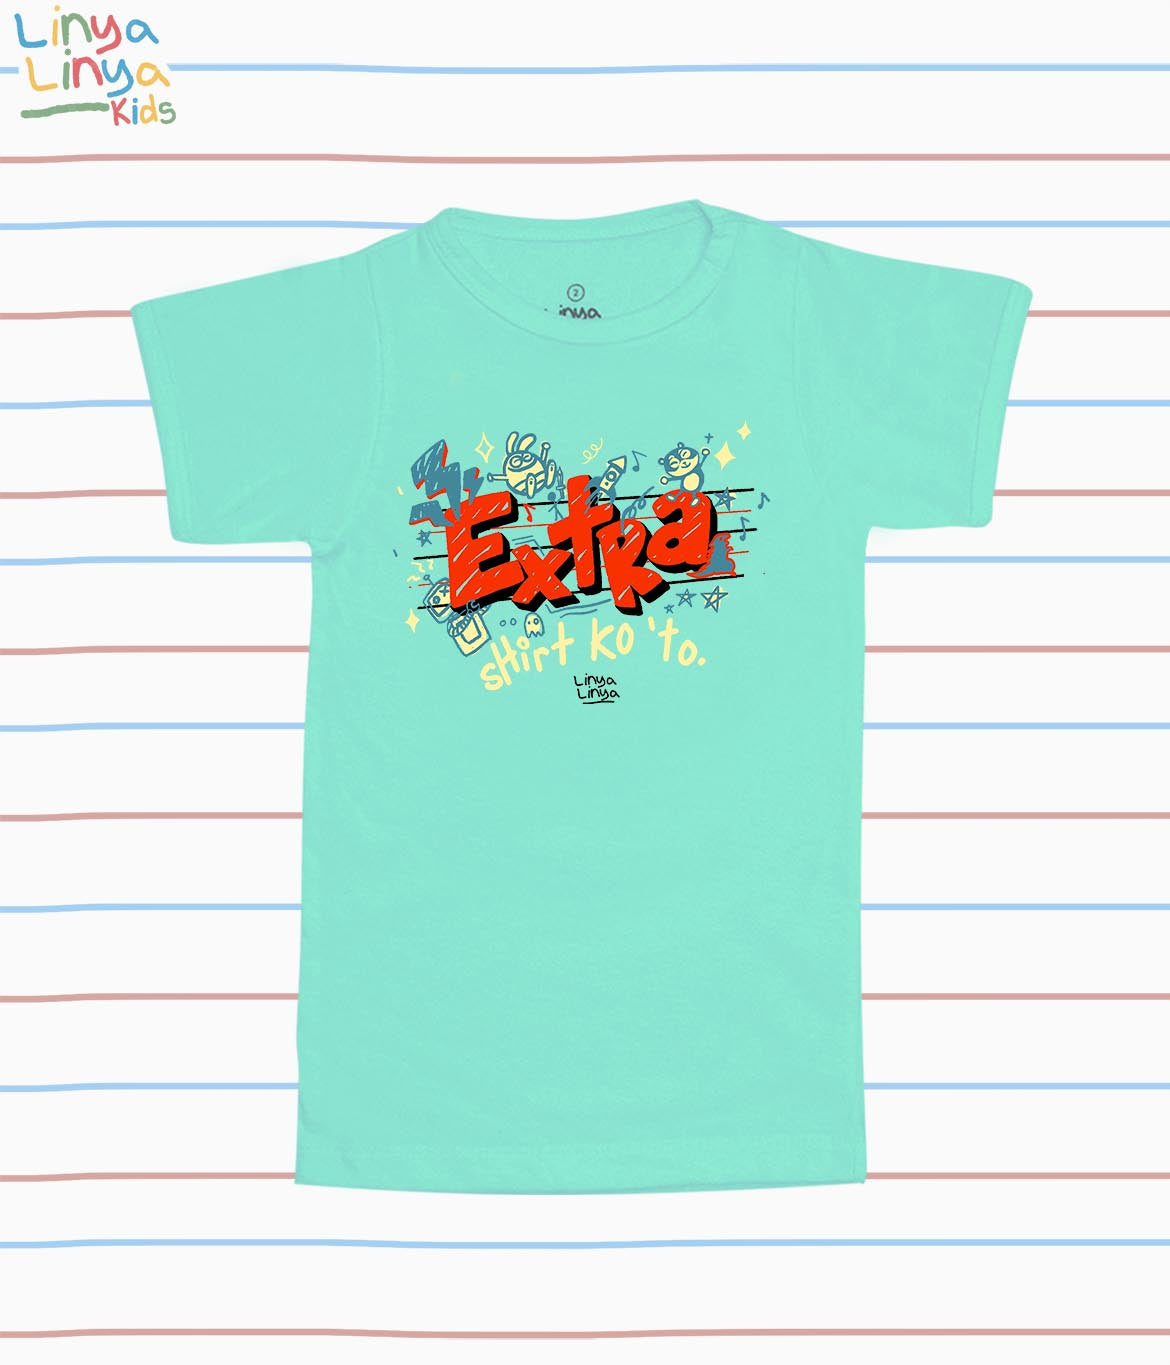 Kids T-Shirt: Extra Shirt Ko 'To.